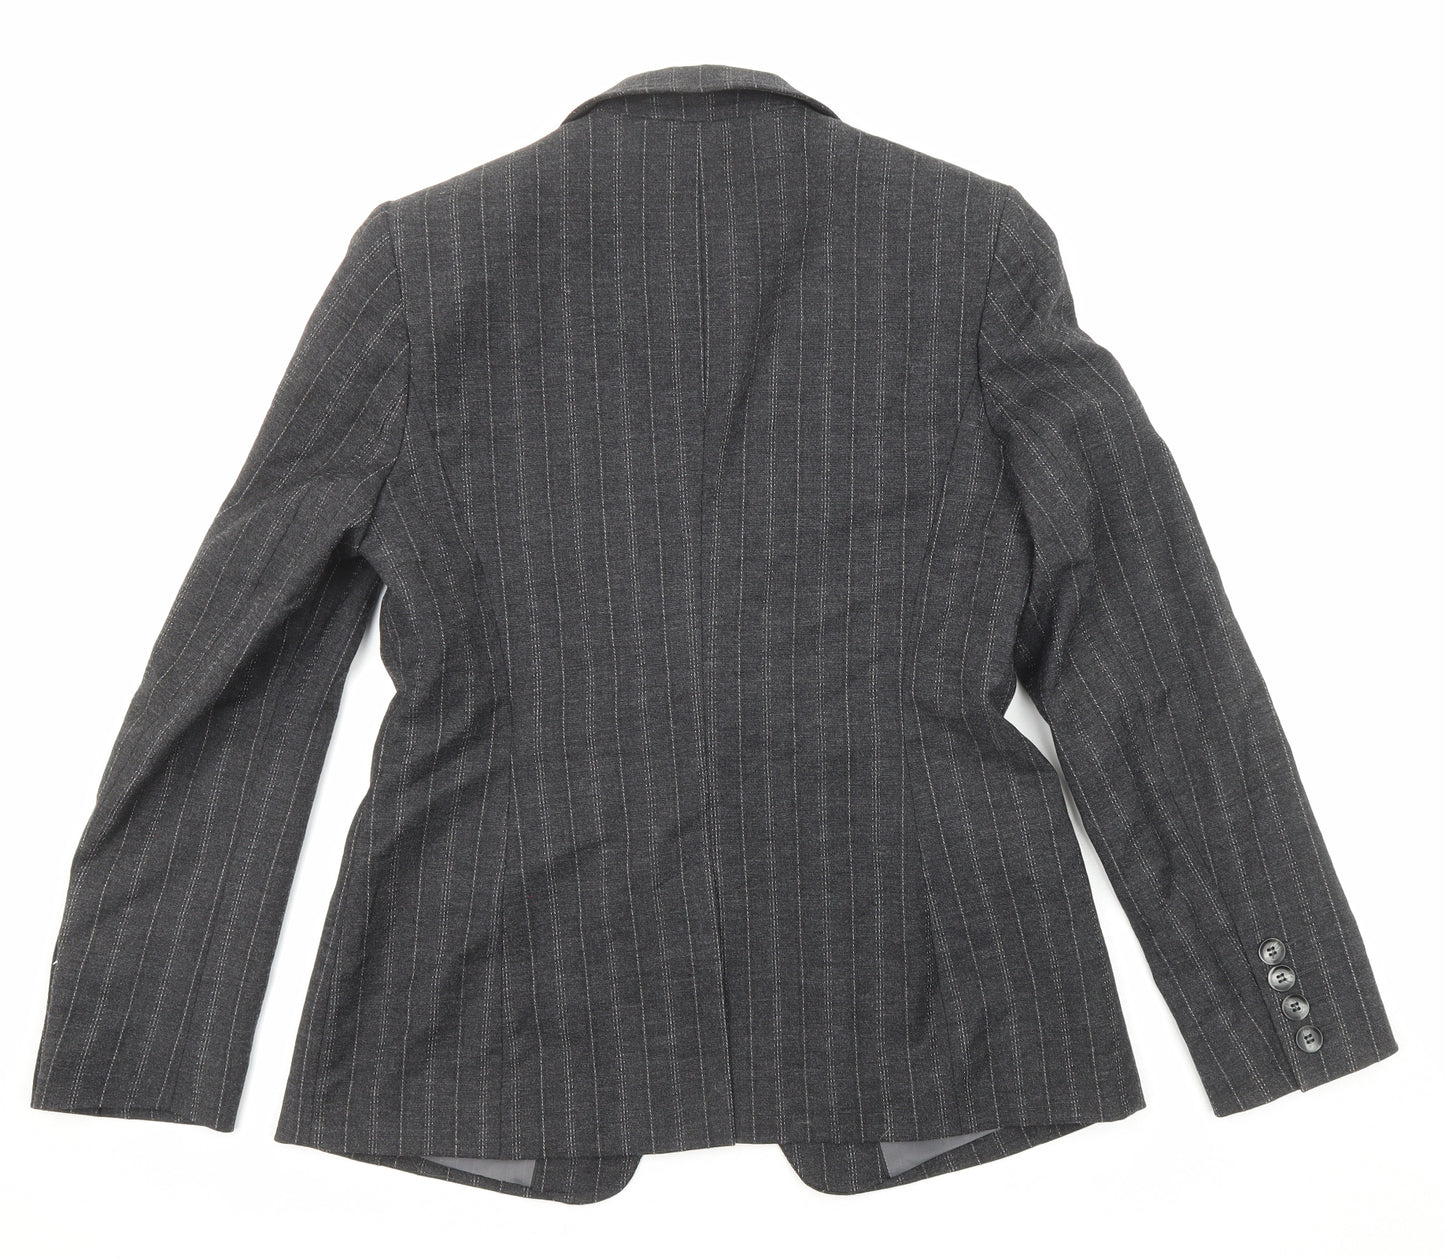 NEXT Womens Grey Pinstripe Wool Jacket Suit Jacket Size 14